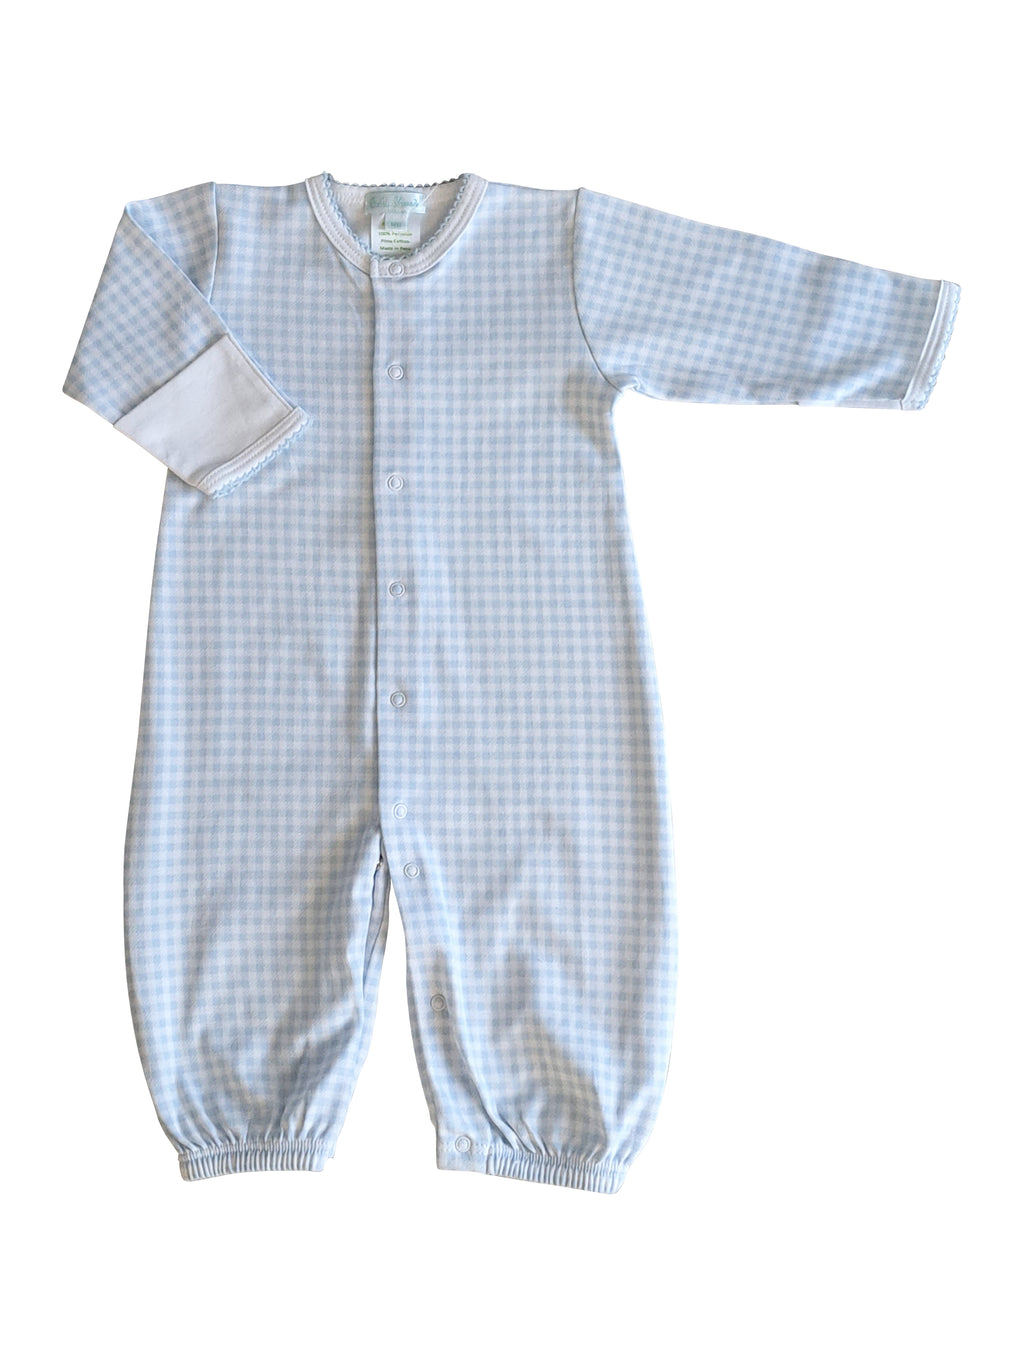 Baby's "Blue Checks" Pima Cotton Converter Gown - Little Threads Inc. Children's Clothing